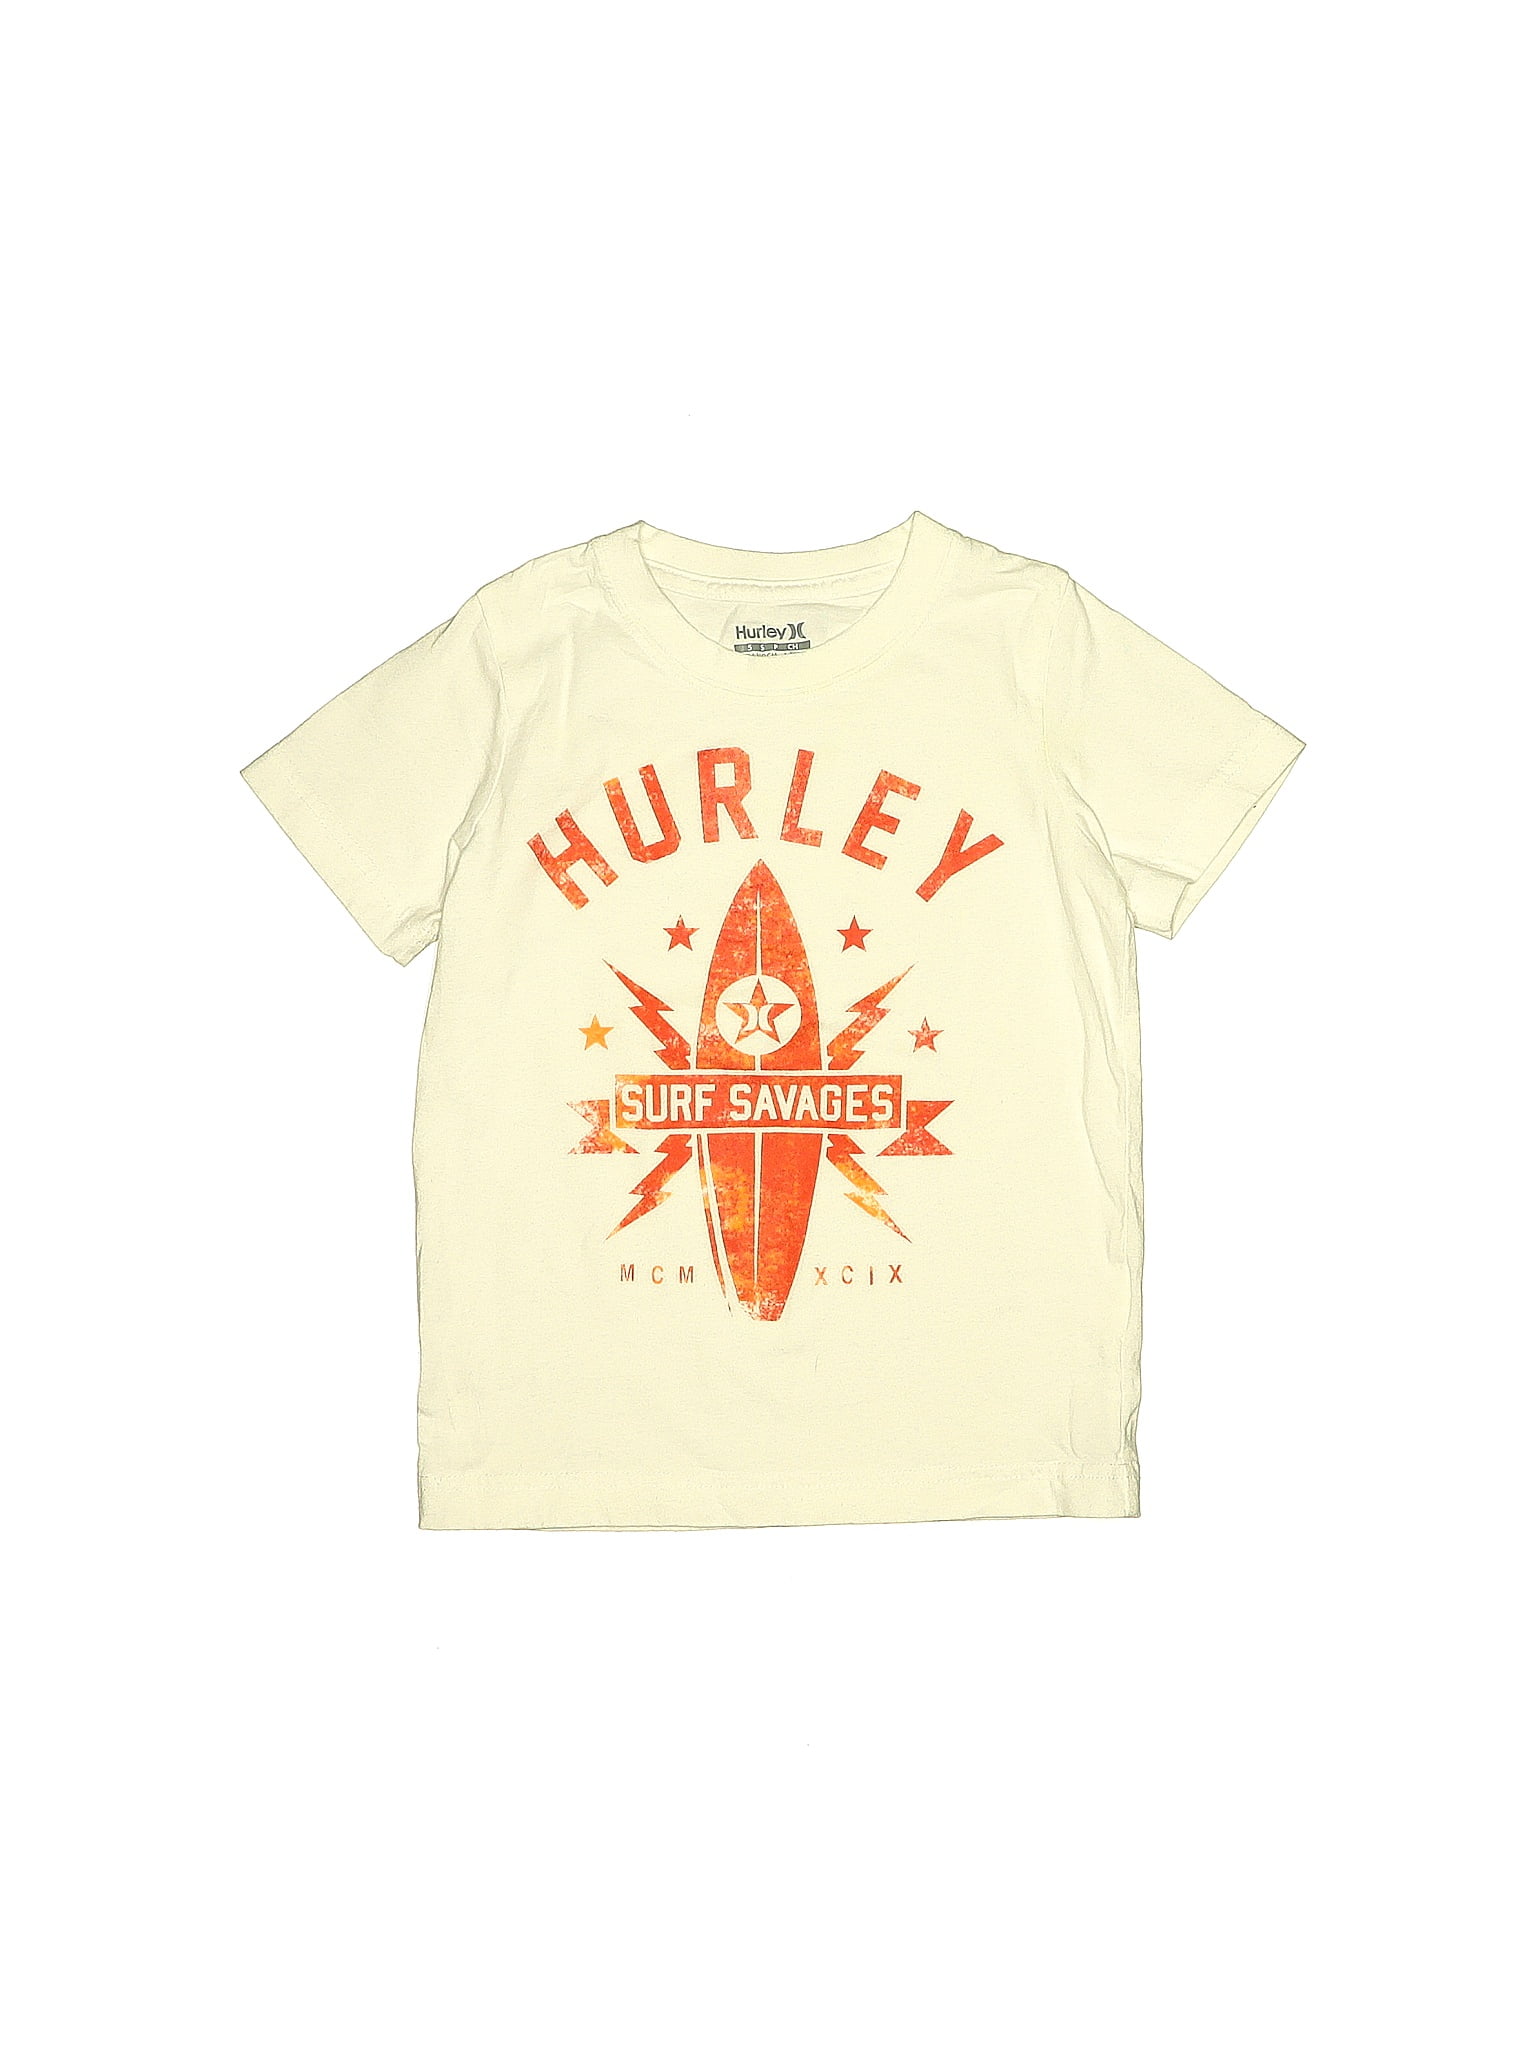 Hurley Quality Goods tee : : Moda